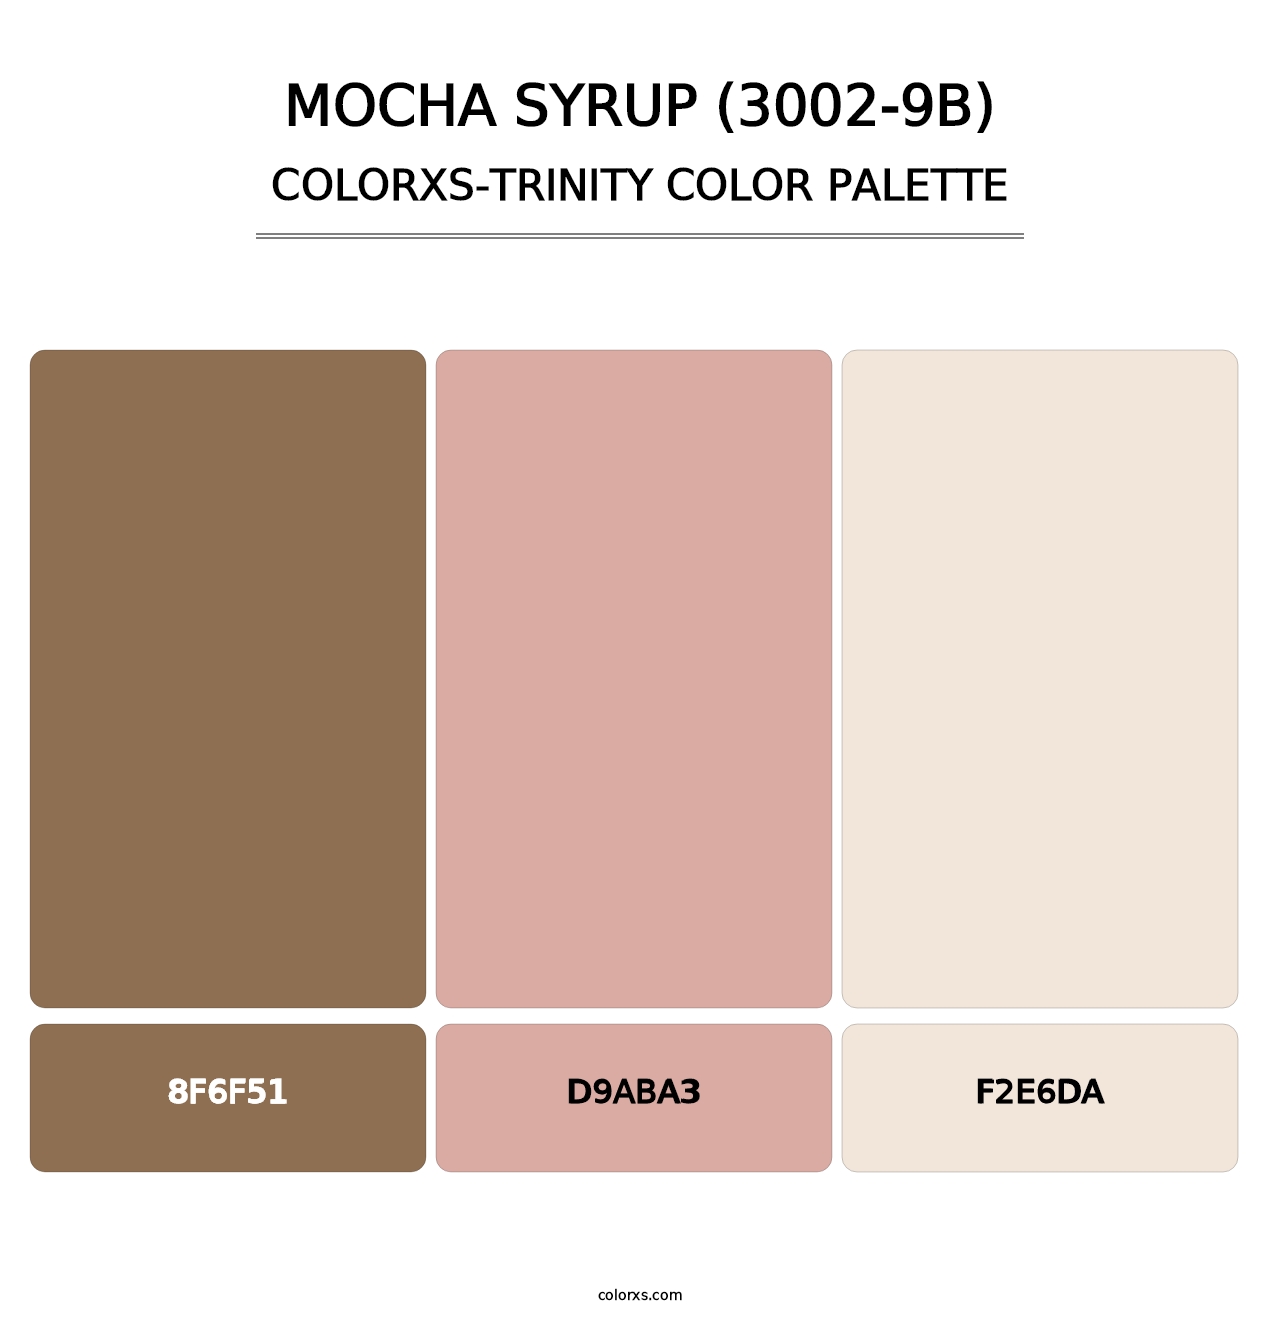 Mocha Syrup (3002-9B) - Colorxs Trinity Palette